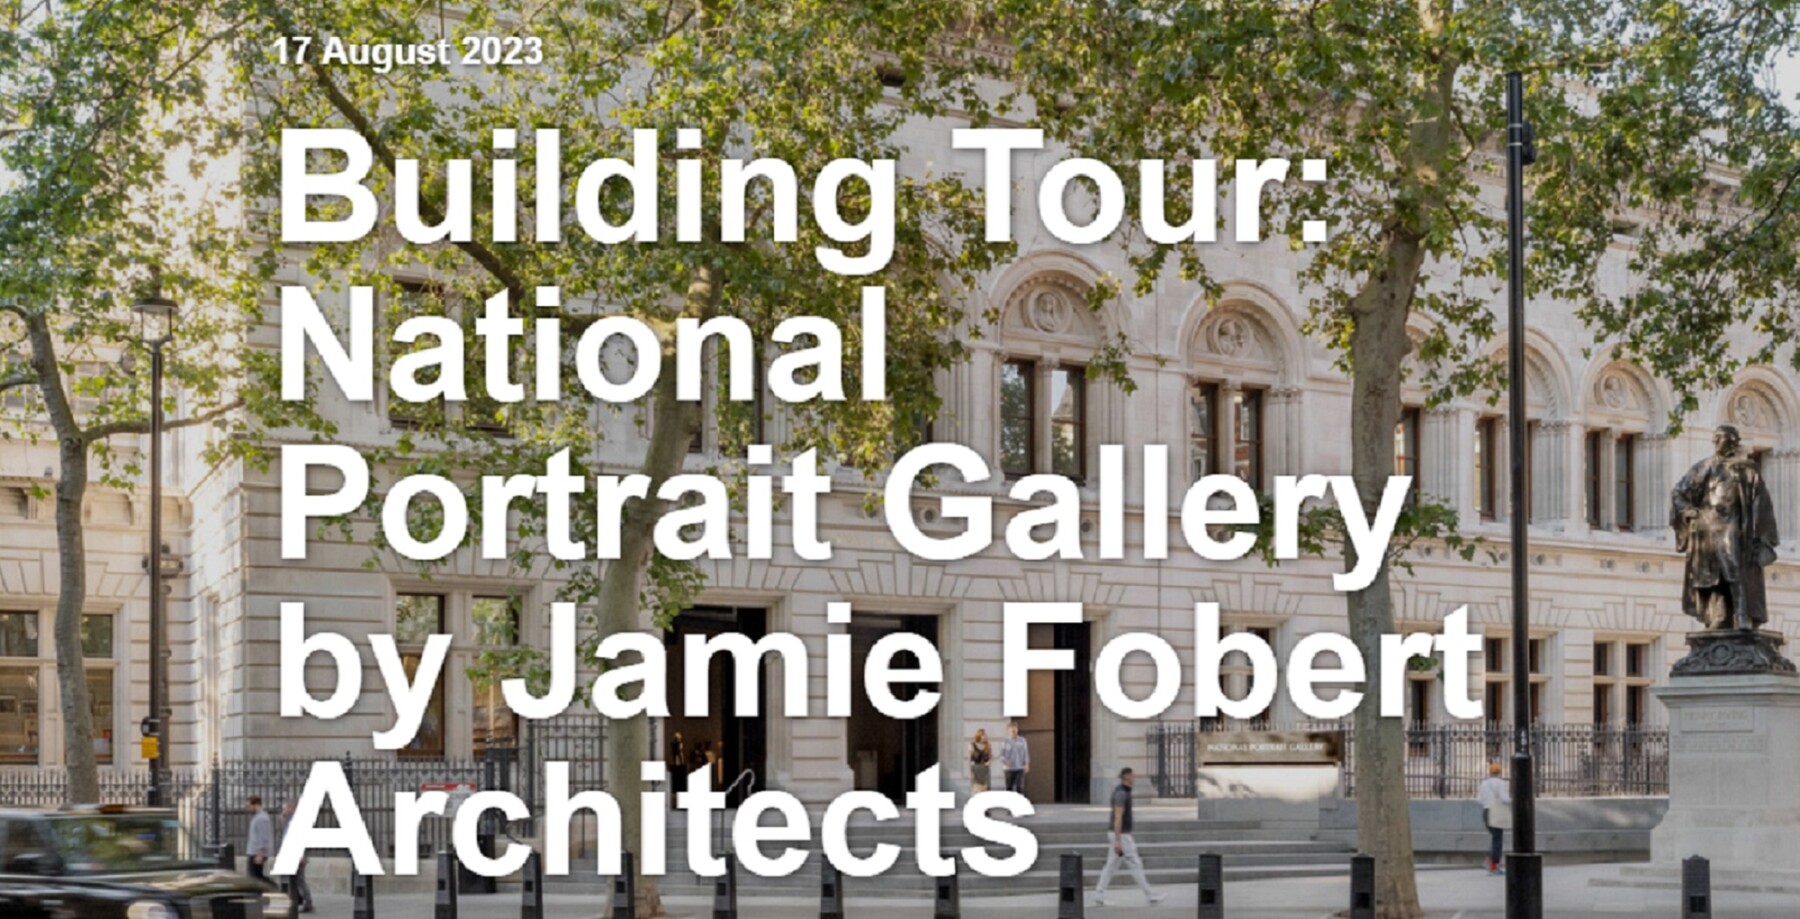 Jamie-Fobert-Architects-National-Portrait-Gallery-Building-Tour-AF-Events-Visit